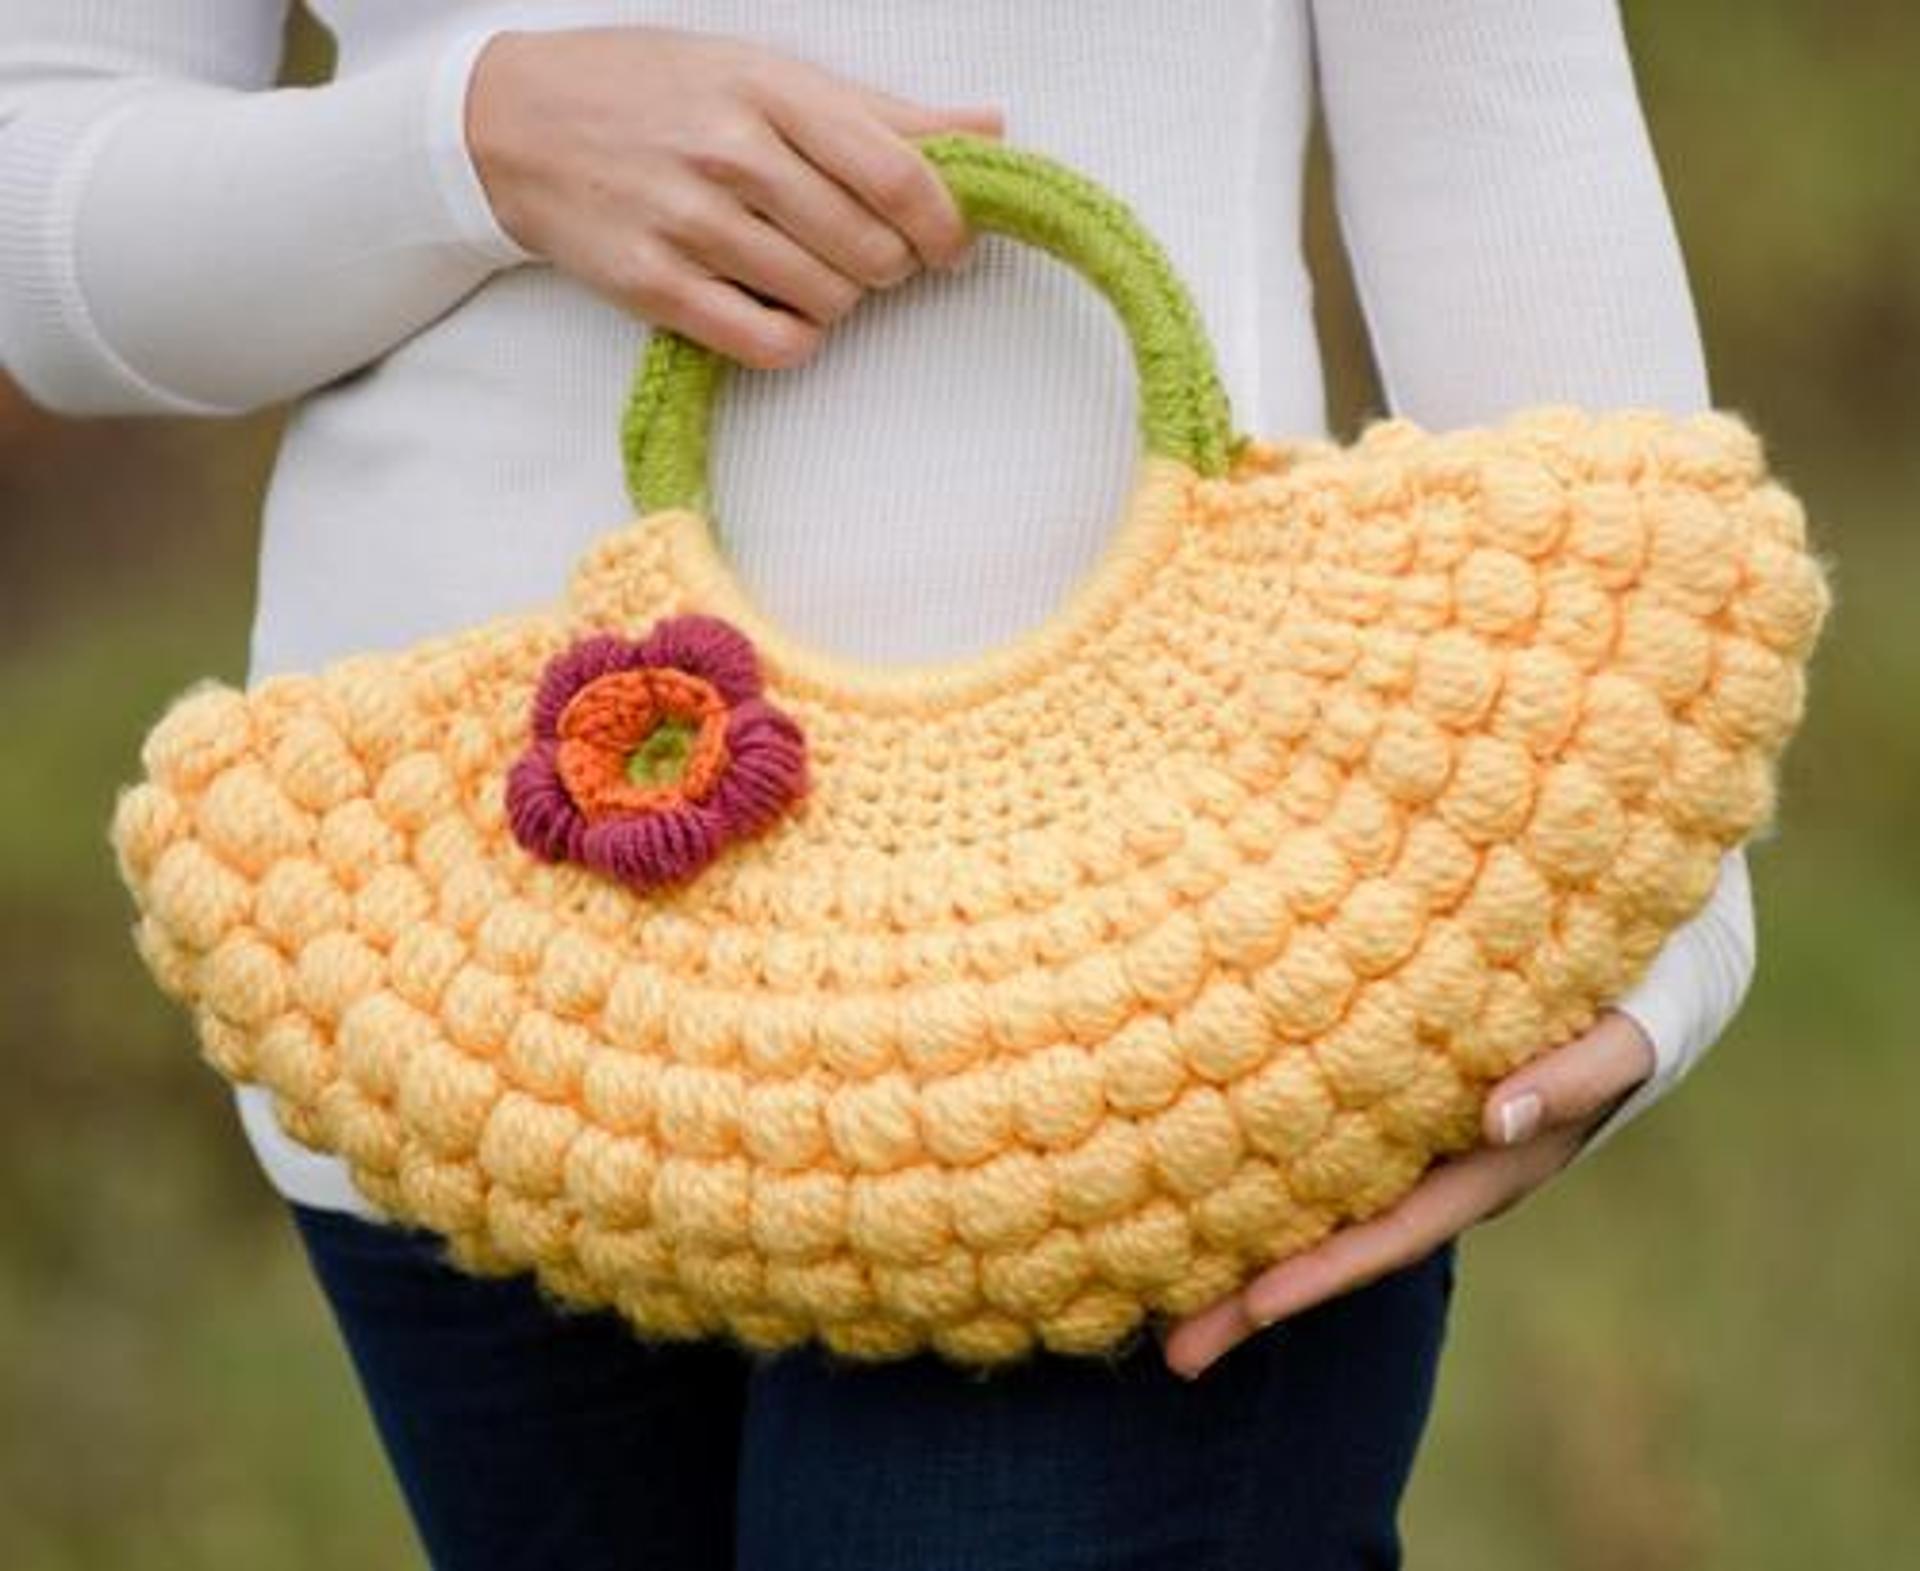 Hand crochet tote bag Knitted wool bag Boho bag crochet handbag